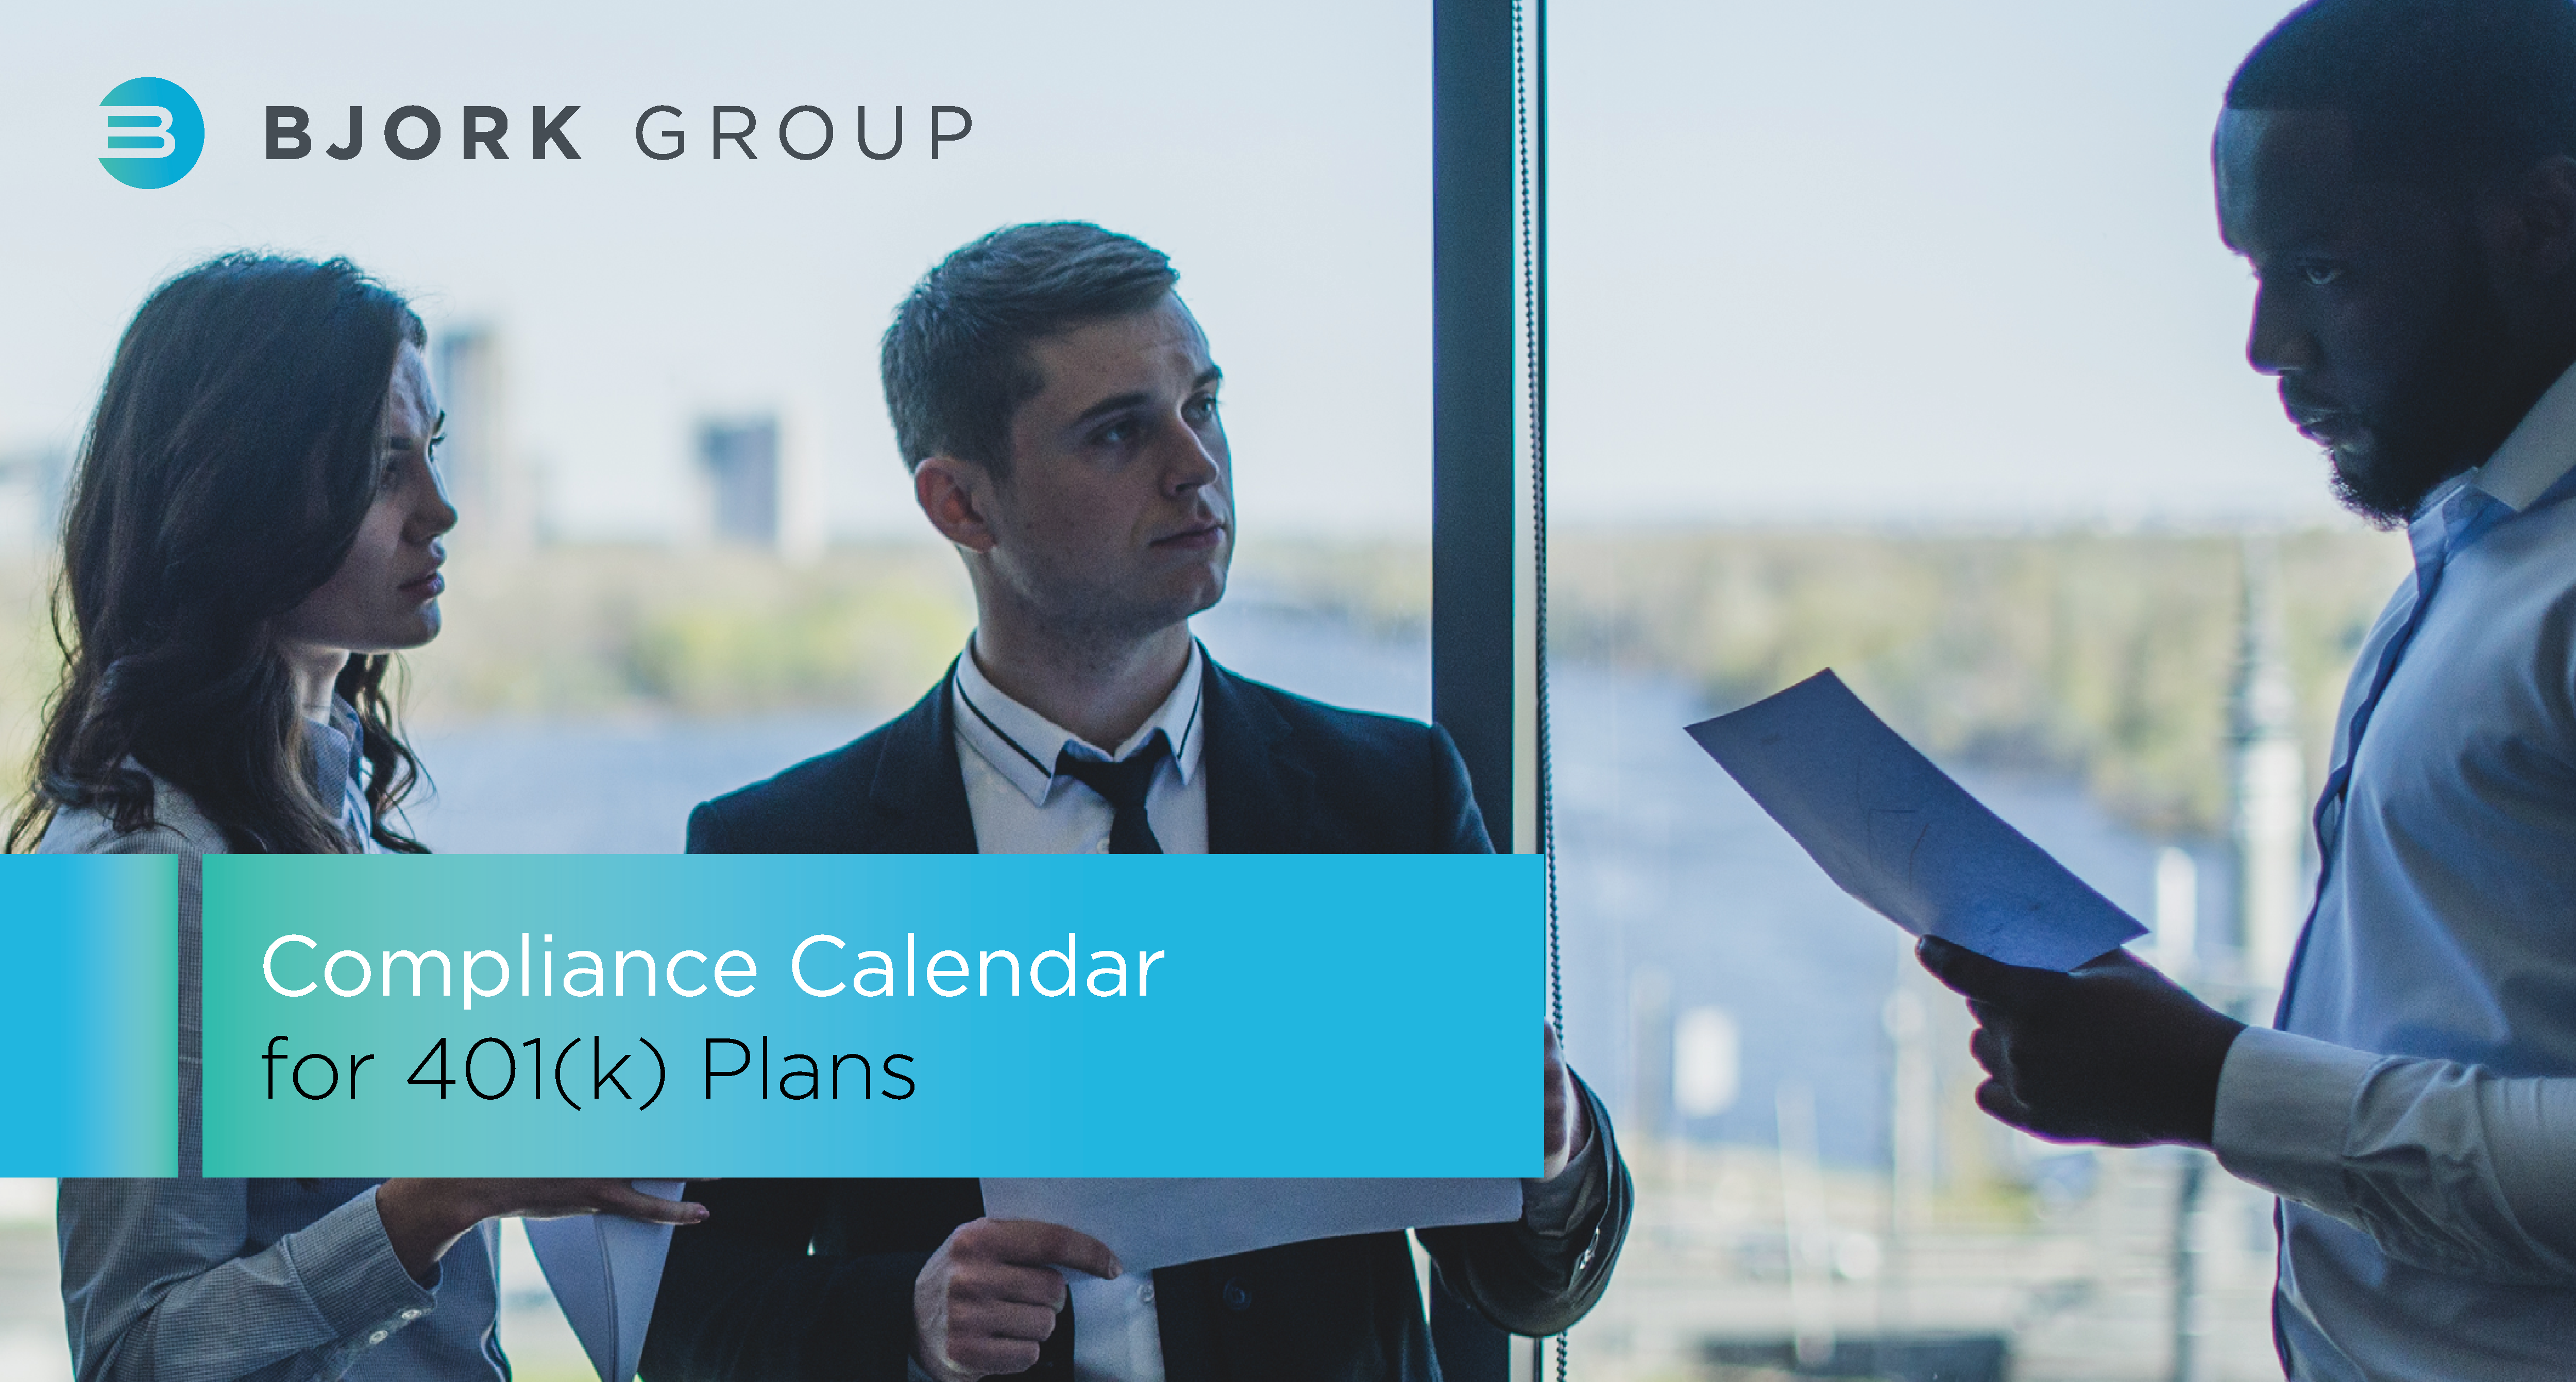 Bjork Group_Headline Image_2019 Compliance Calendar